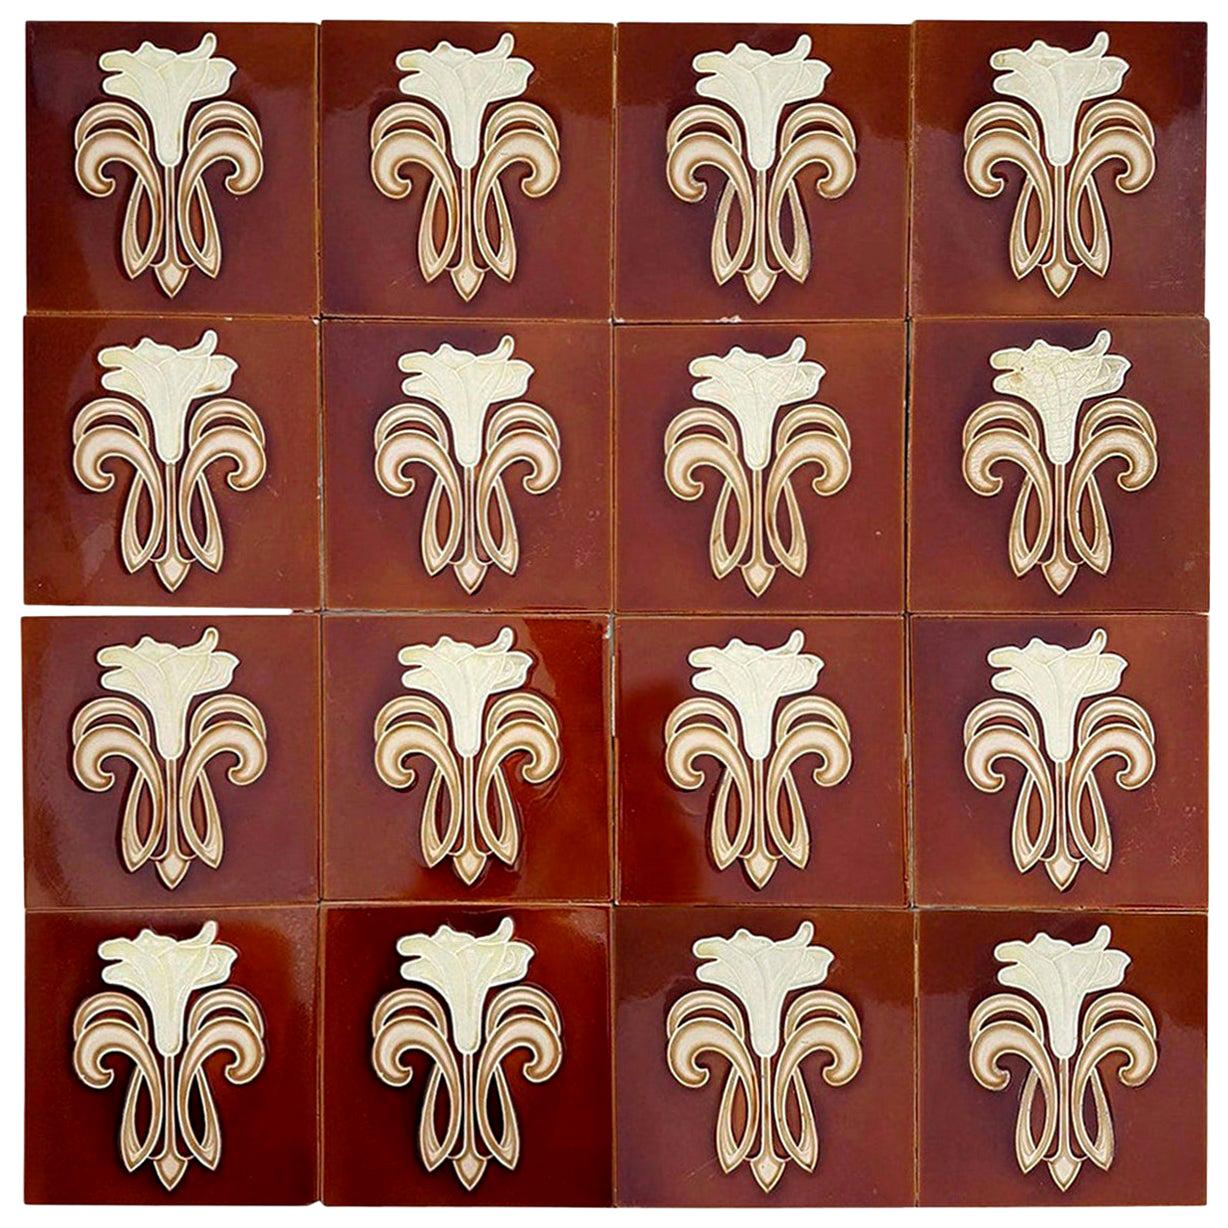 30 Art Jugendstil Ceramic Tiles by Gilliot Fabrieken Te Hemiksem, circa 1920